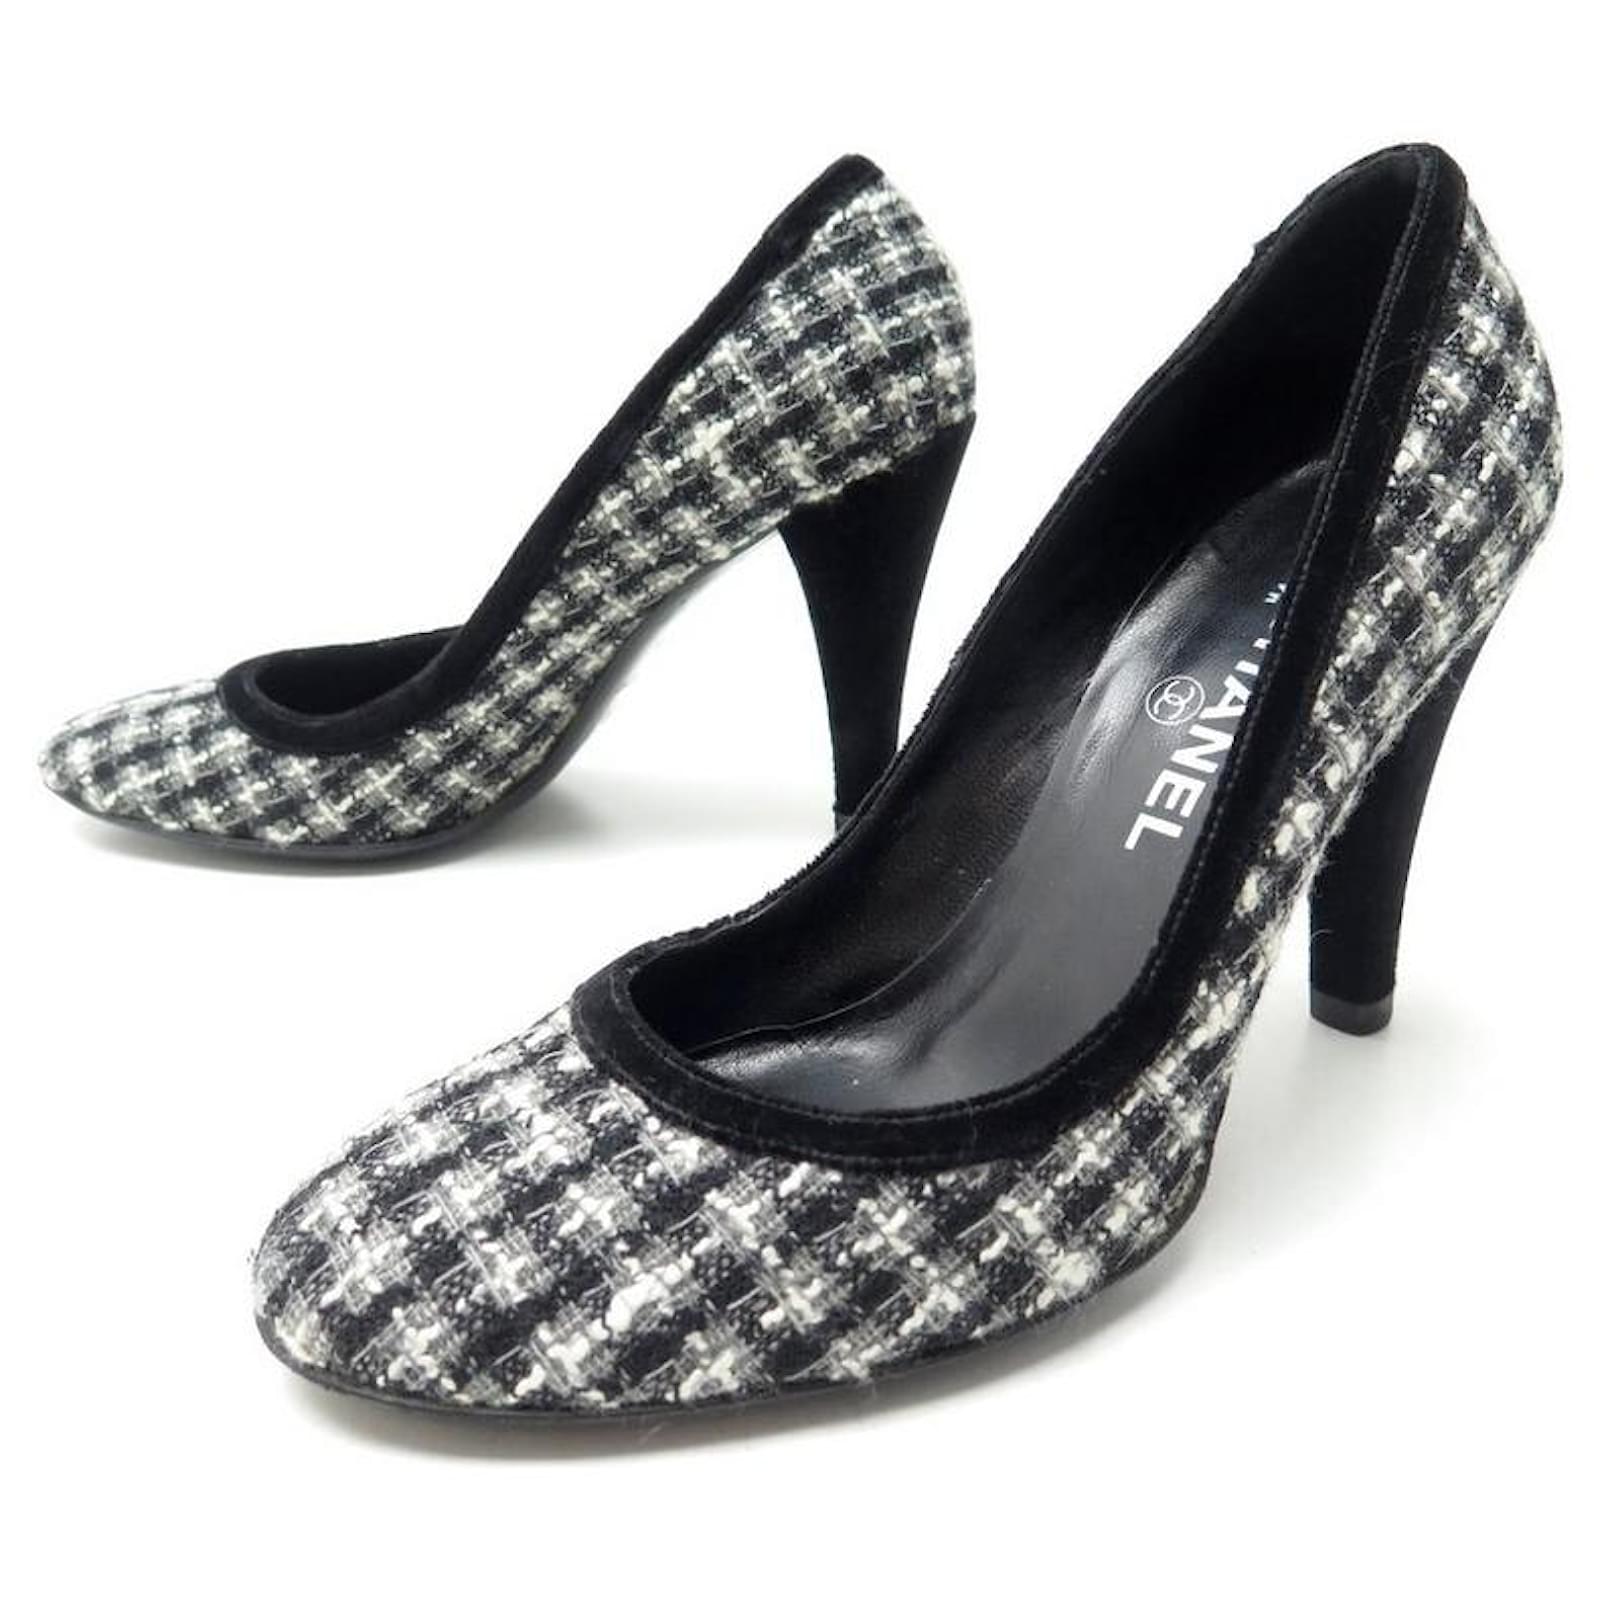 Chanel Shoe Size 37 Conversion Flash Sales 50 OFF   wwwbridgepartnersllccom